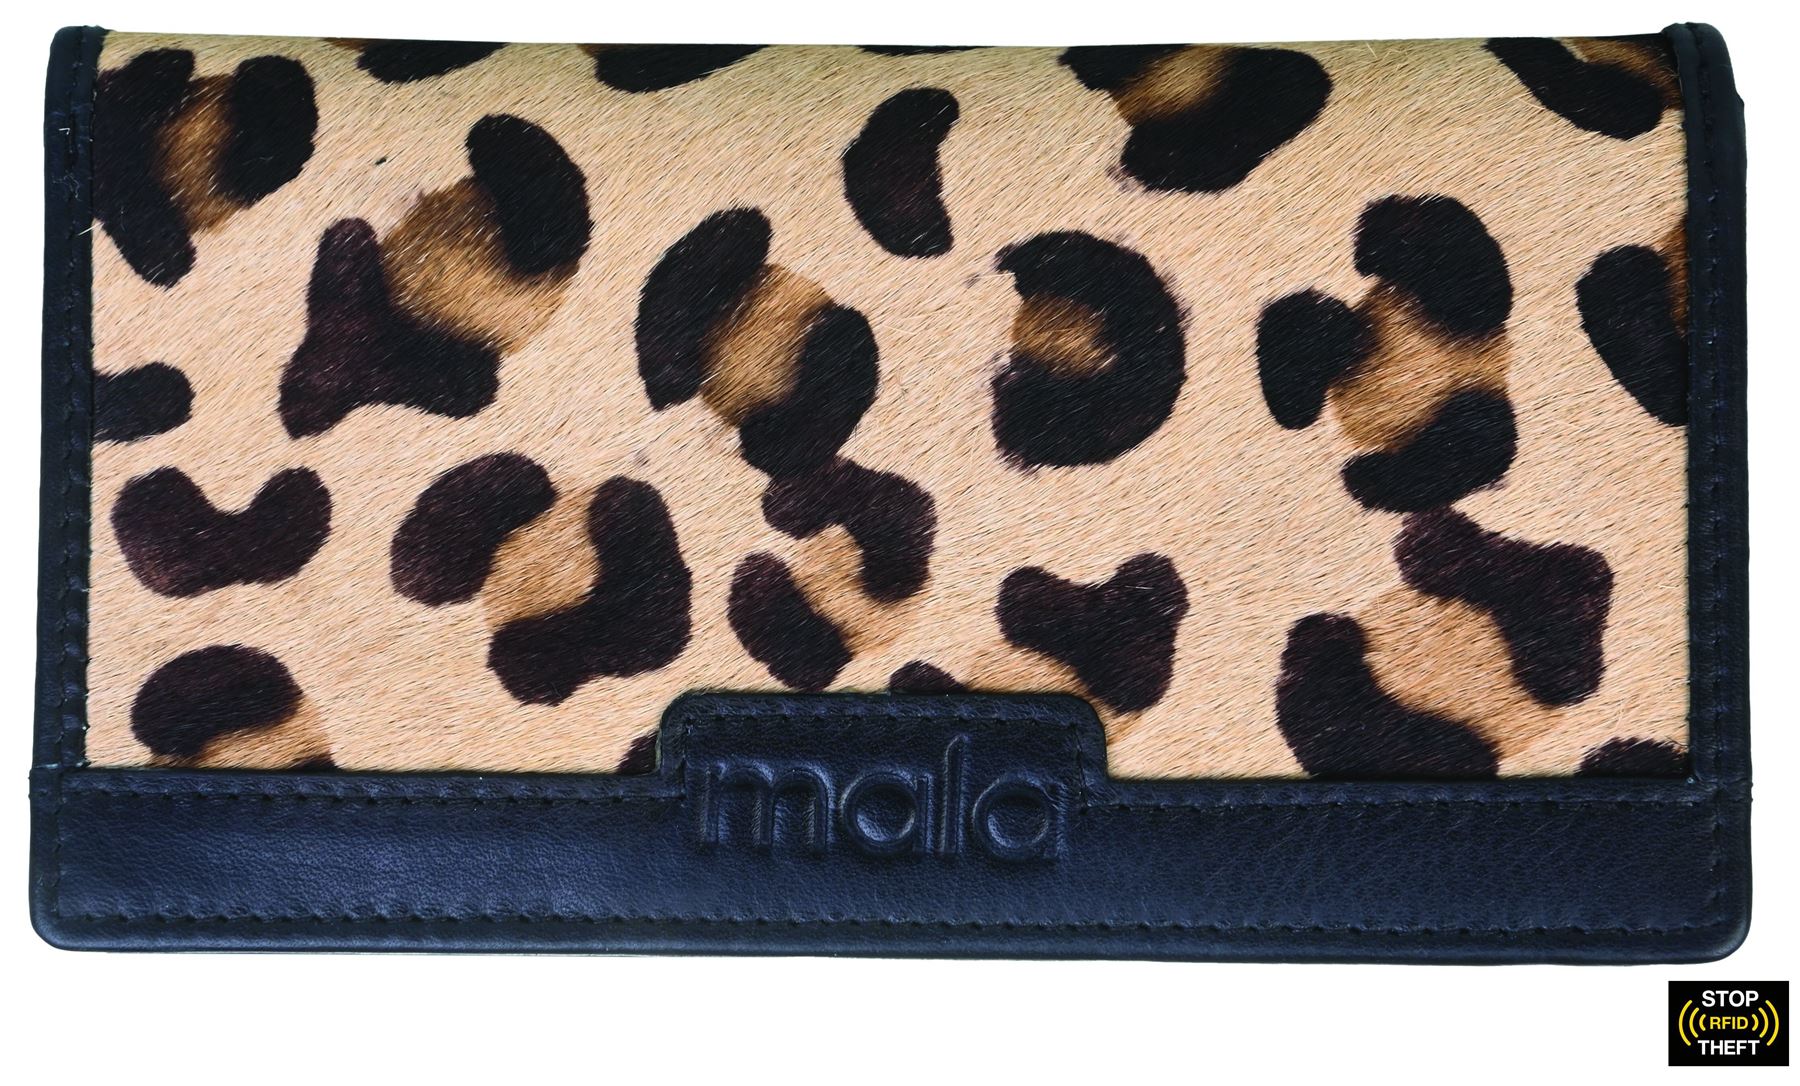 Dolce & Gabbana leopard-print Tote Bag - Farfetch